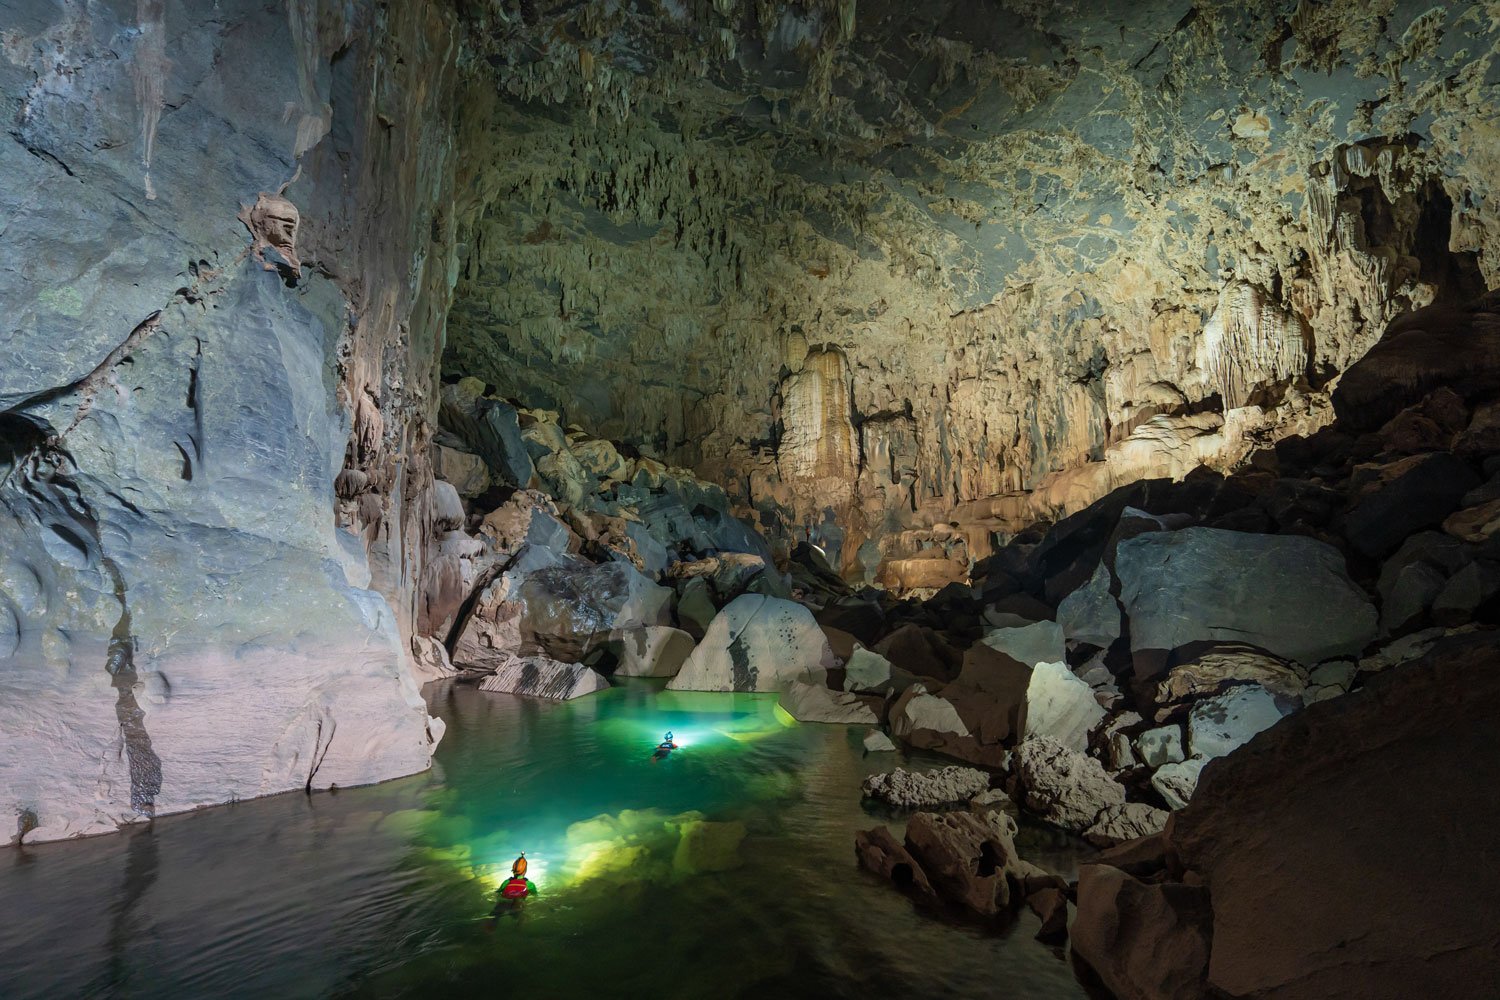 Swimming in Hang Ba cave